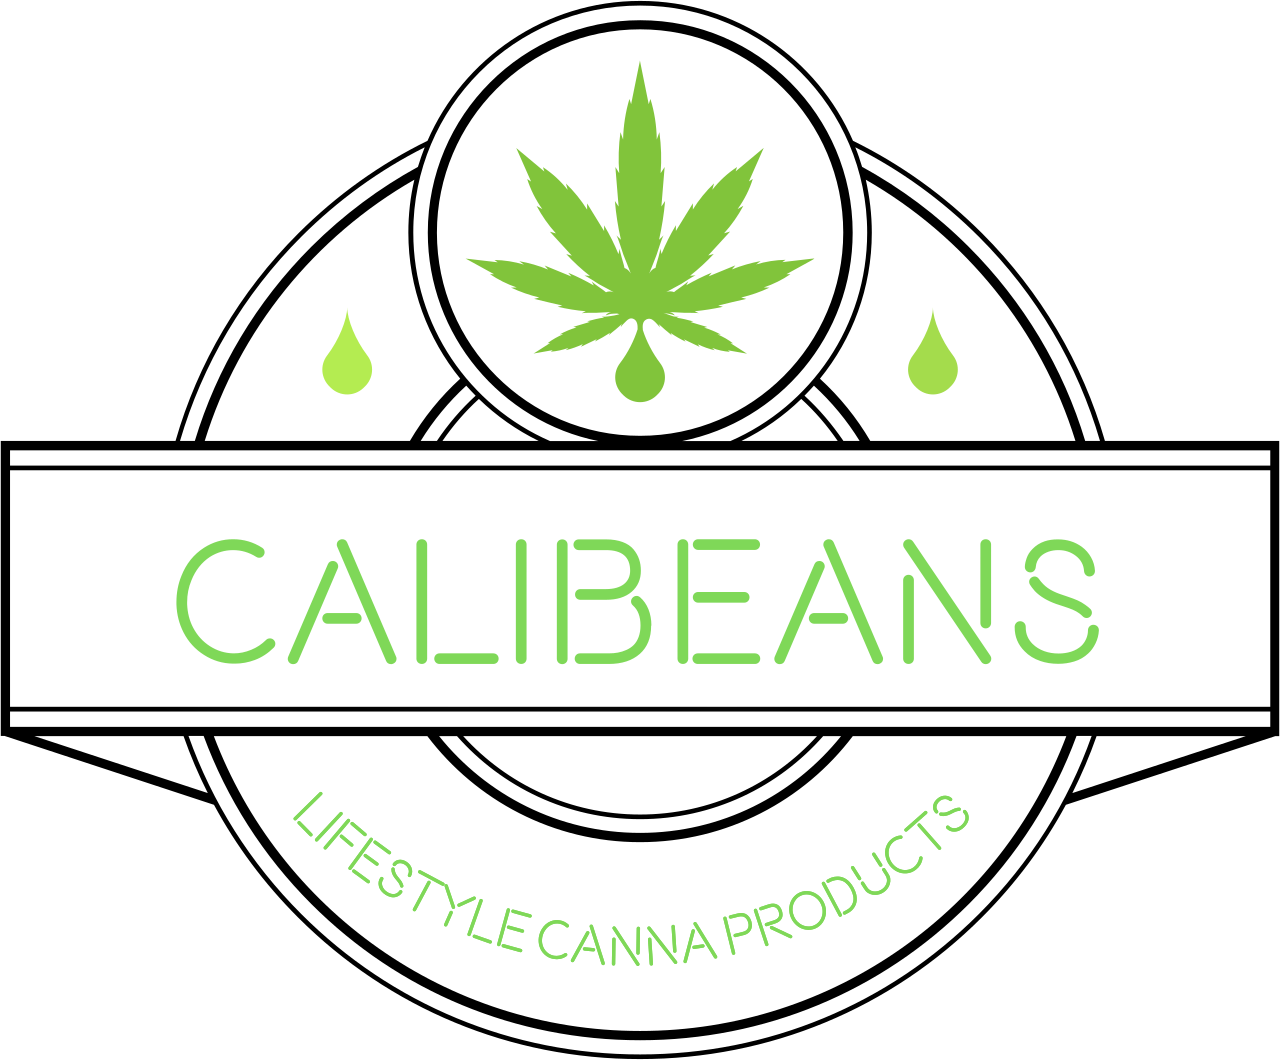 Calibeans's logo